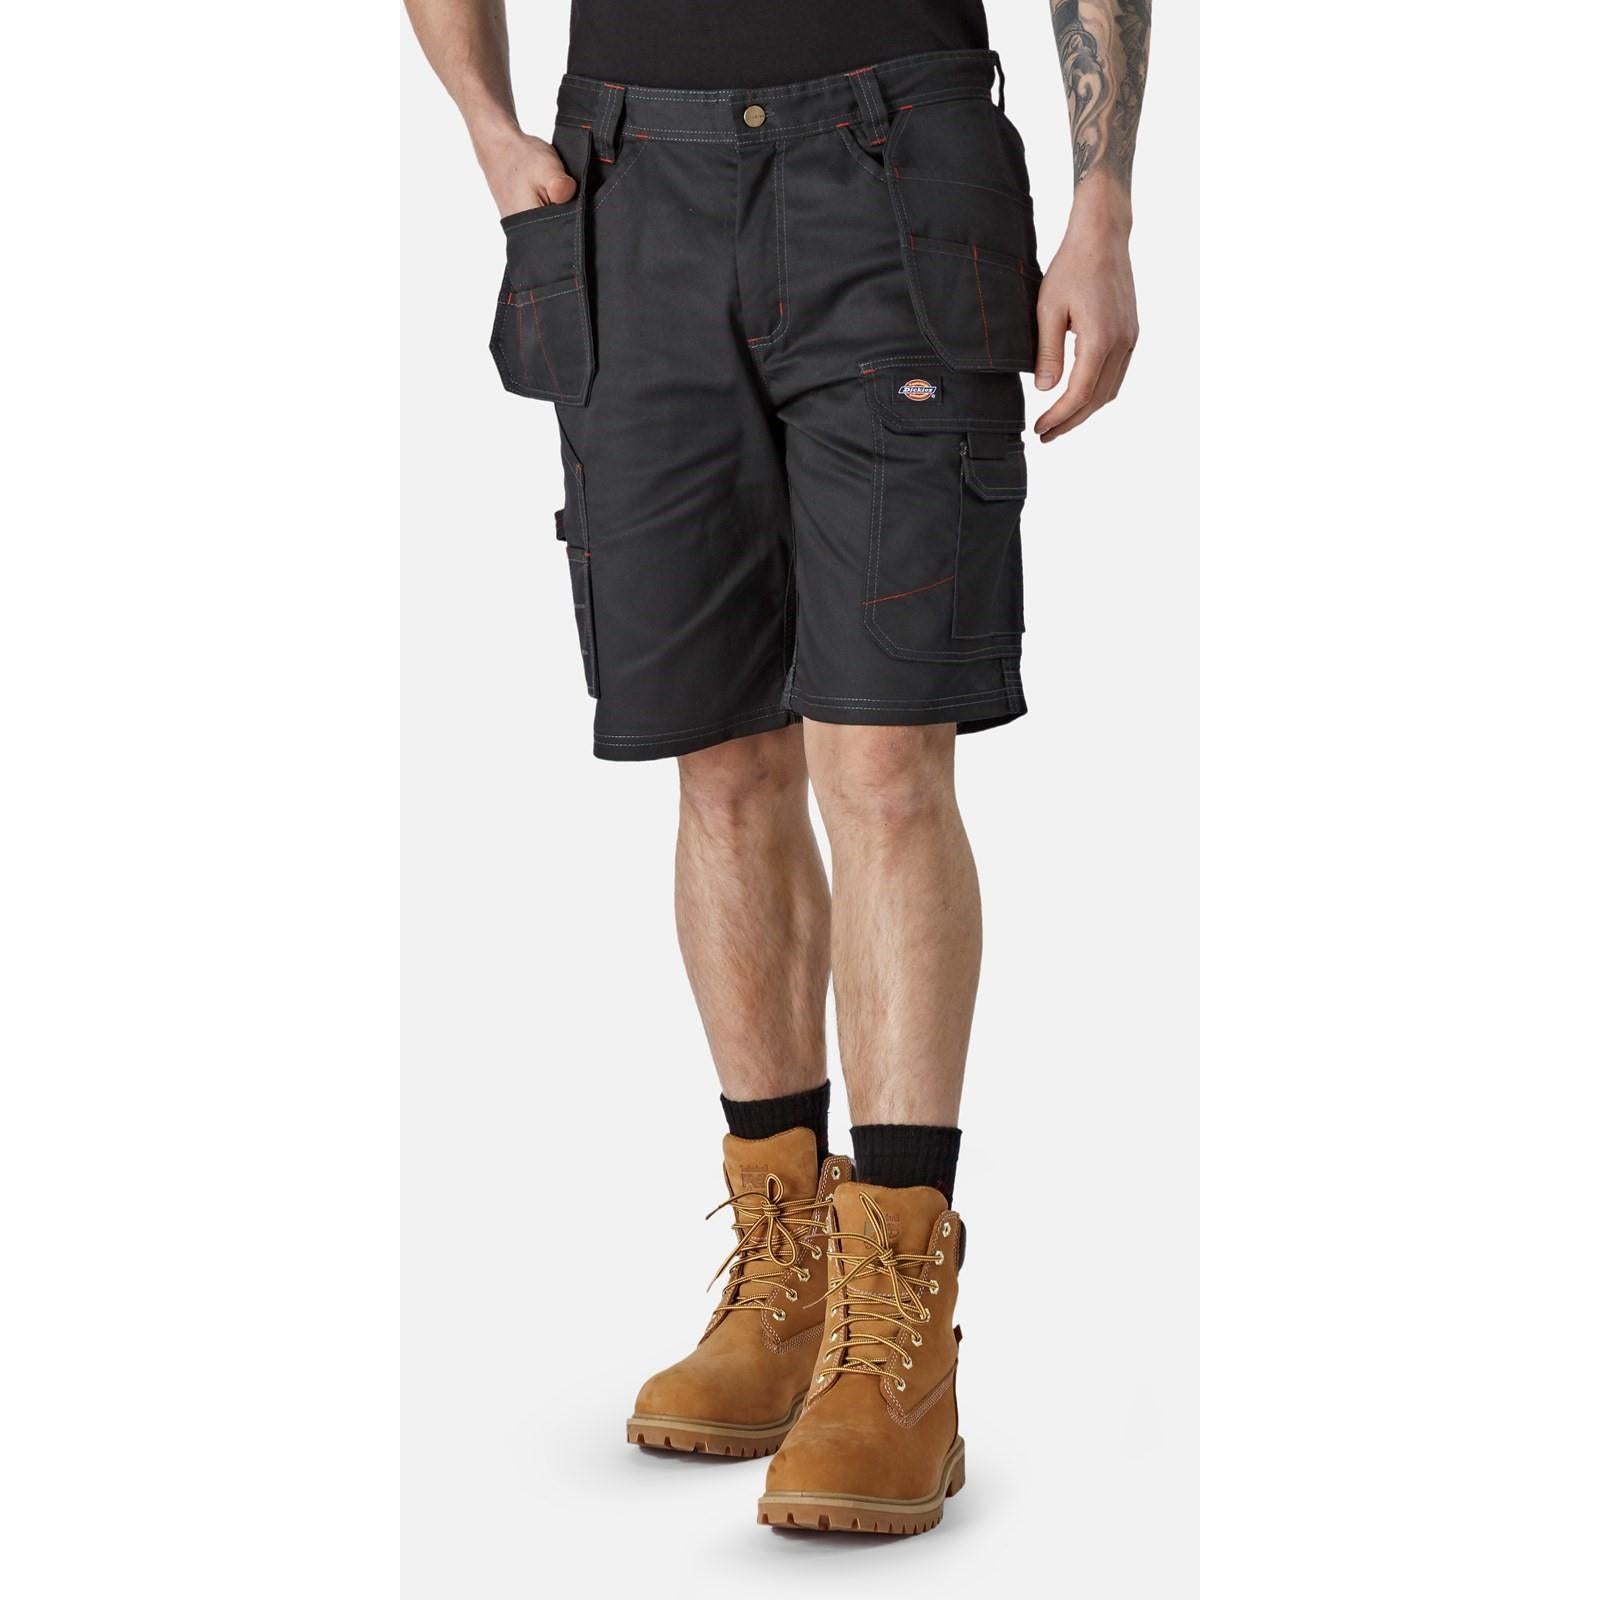 Dickies Redhawk Pro black holster cargo multi pockets work shorts